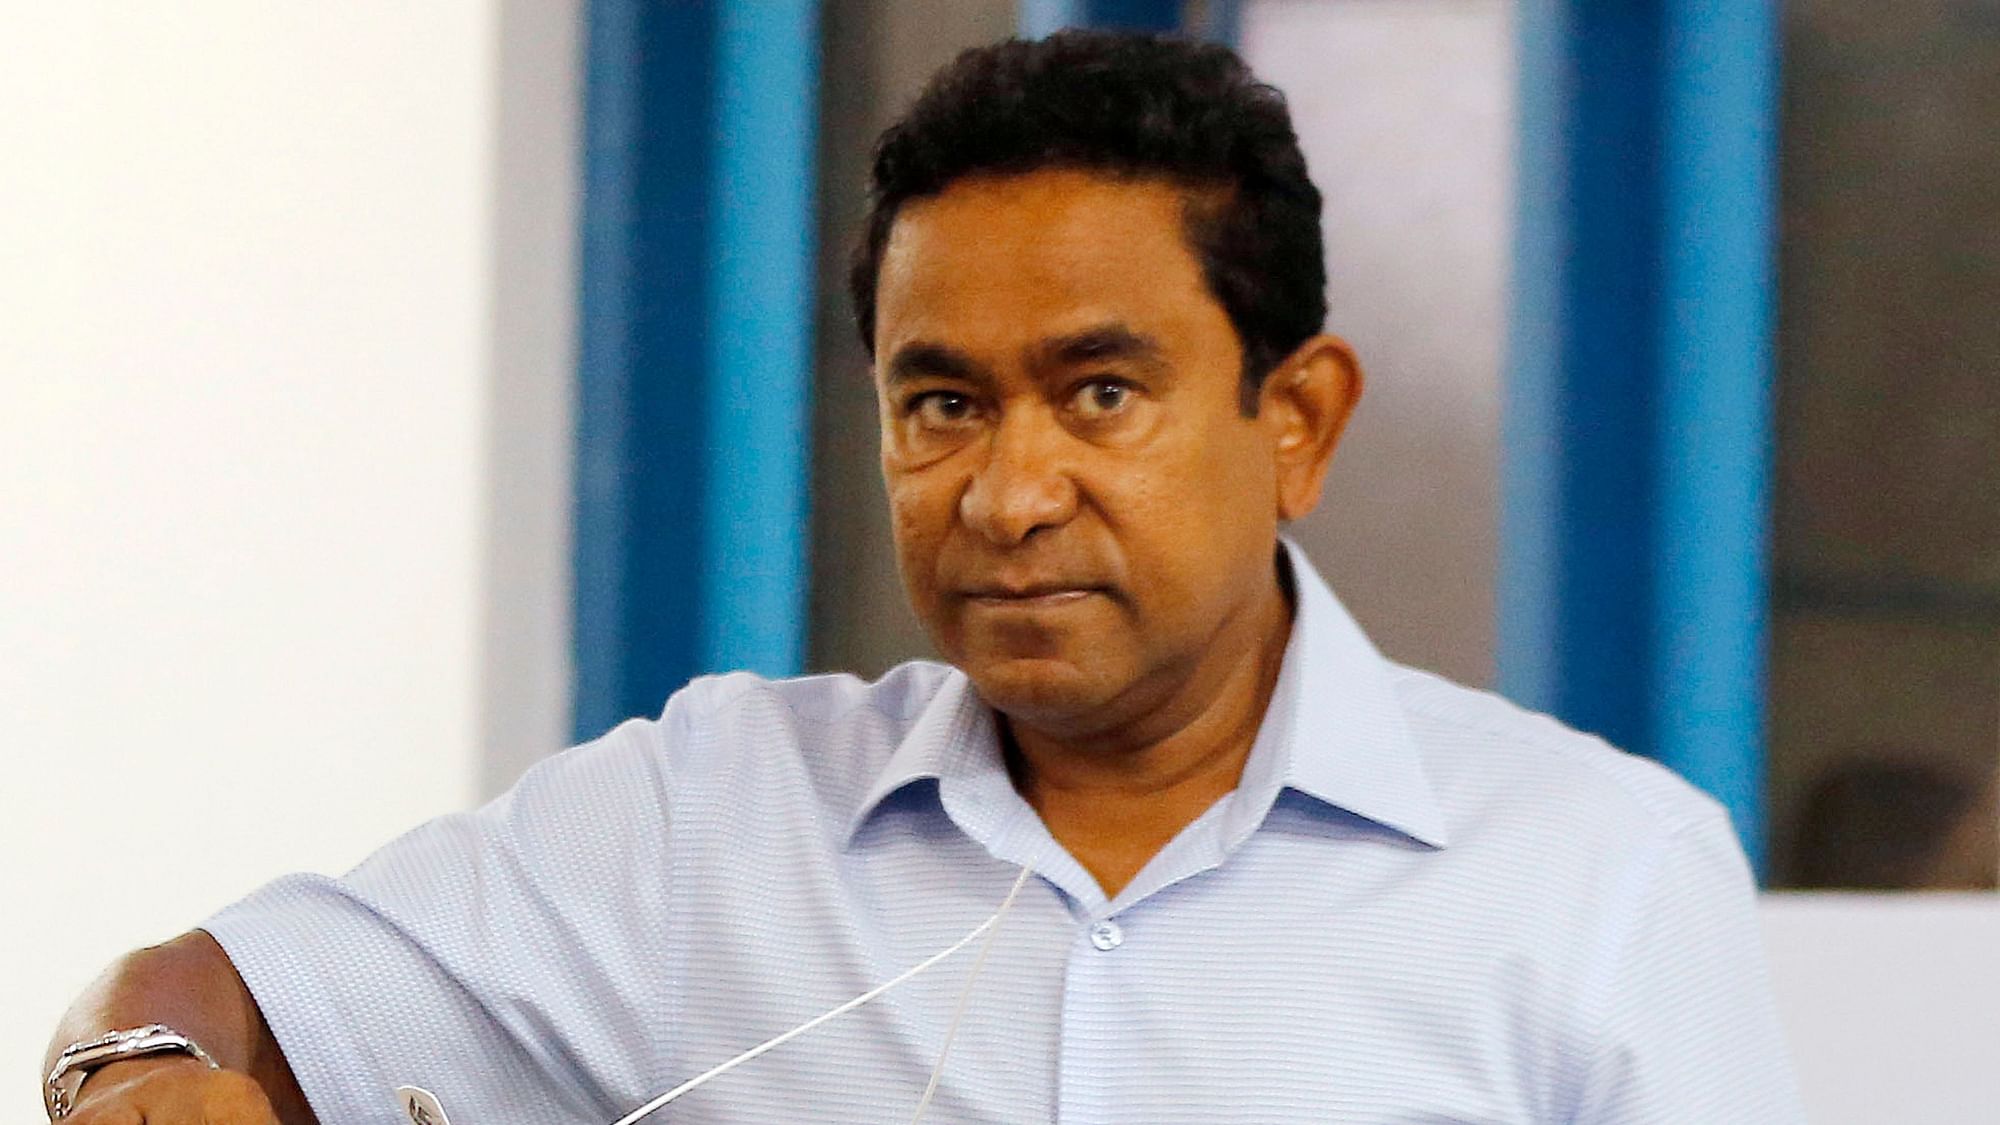 File photo of Abdulla Yameen.